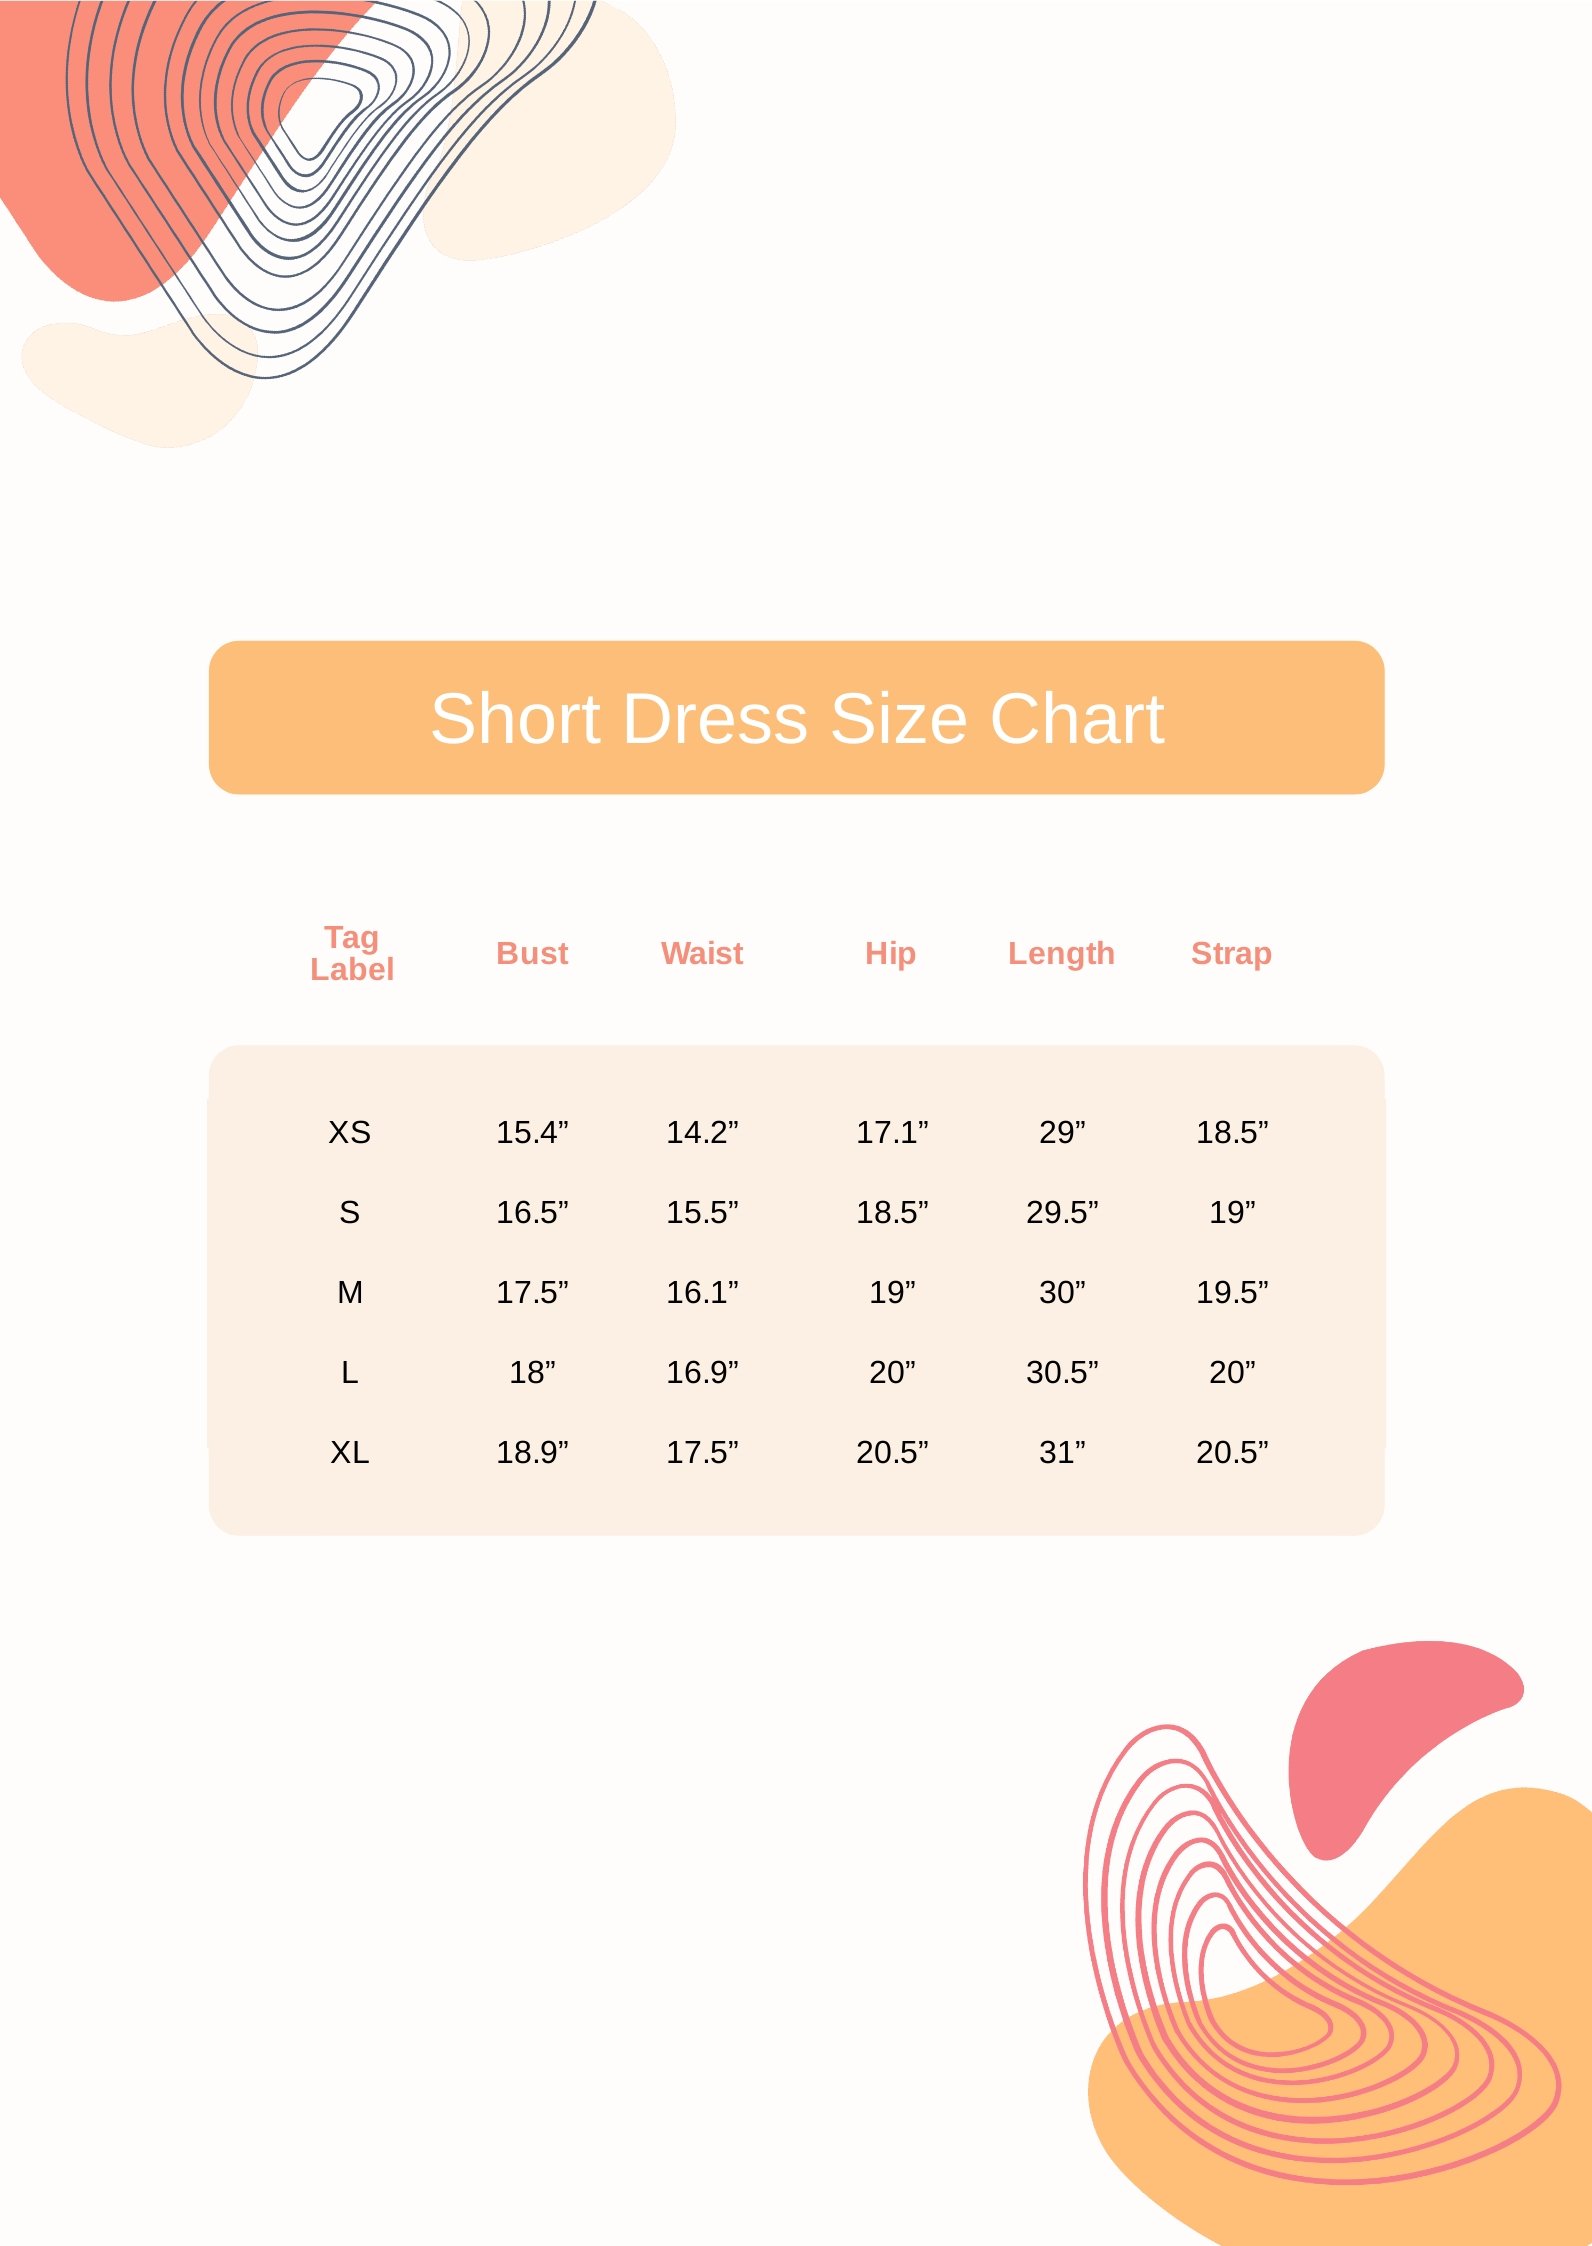 Short Dress Size Chart in PDF